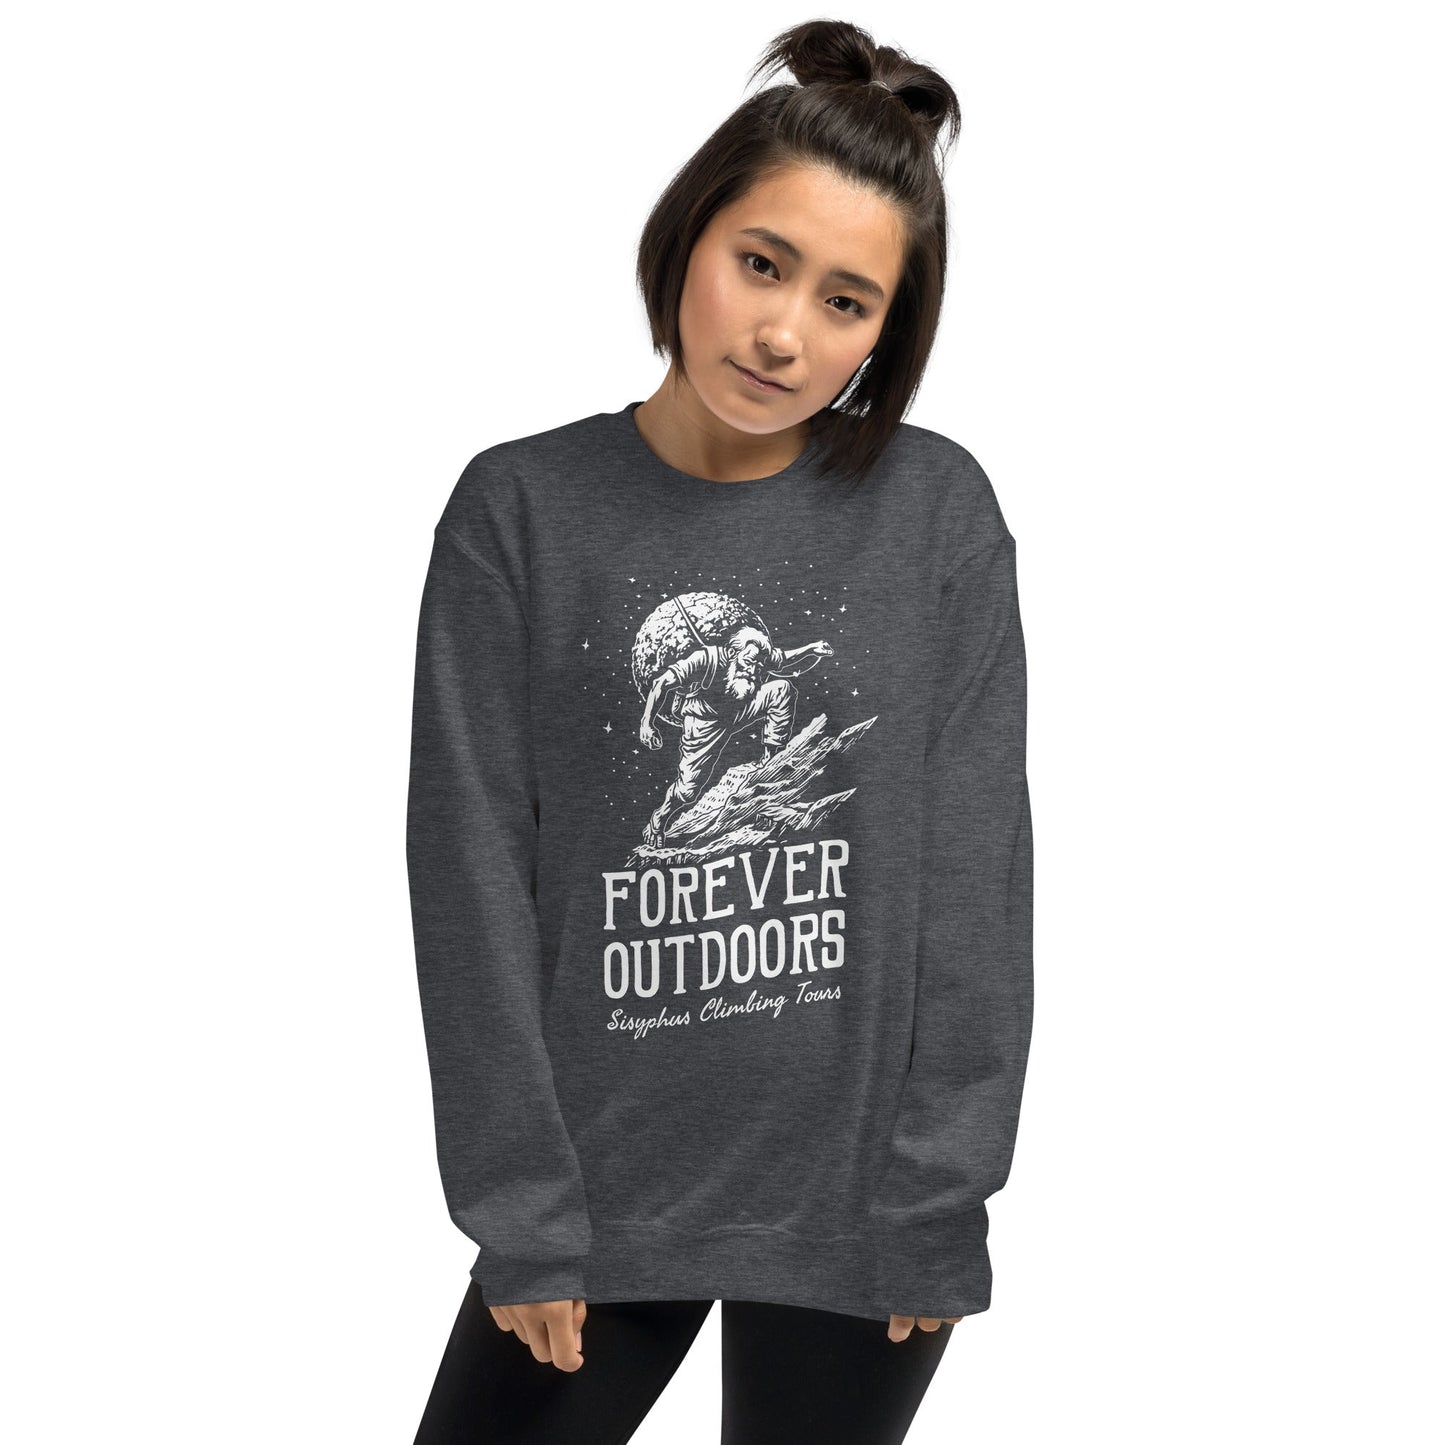 Forever Outdoors - Sisyphus Climbing Tours - Sweatshirt